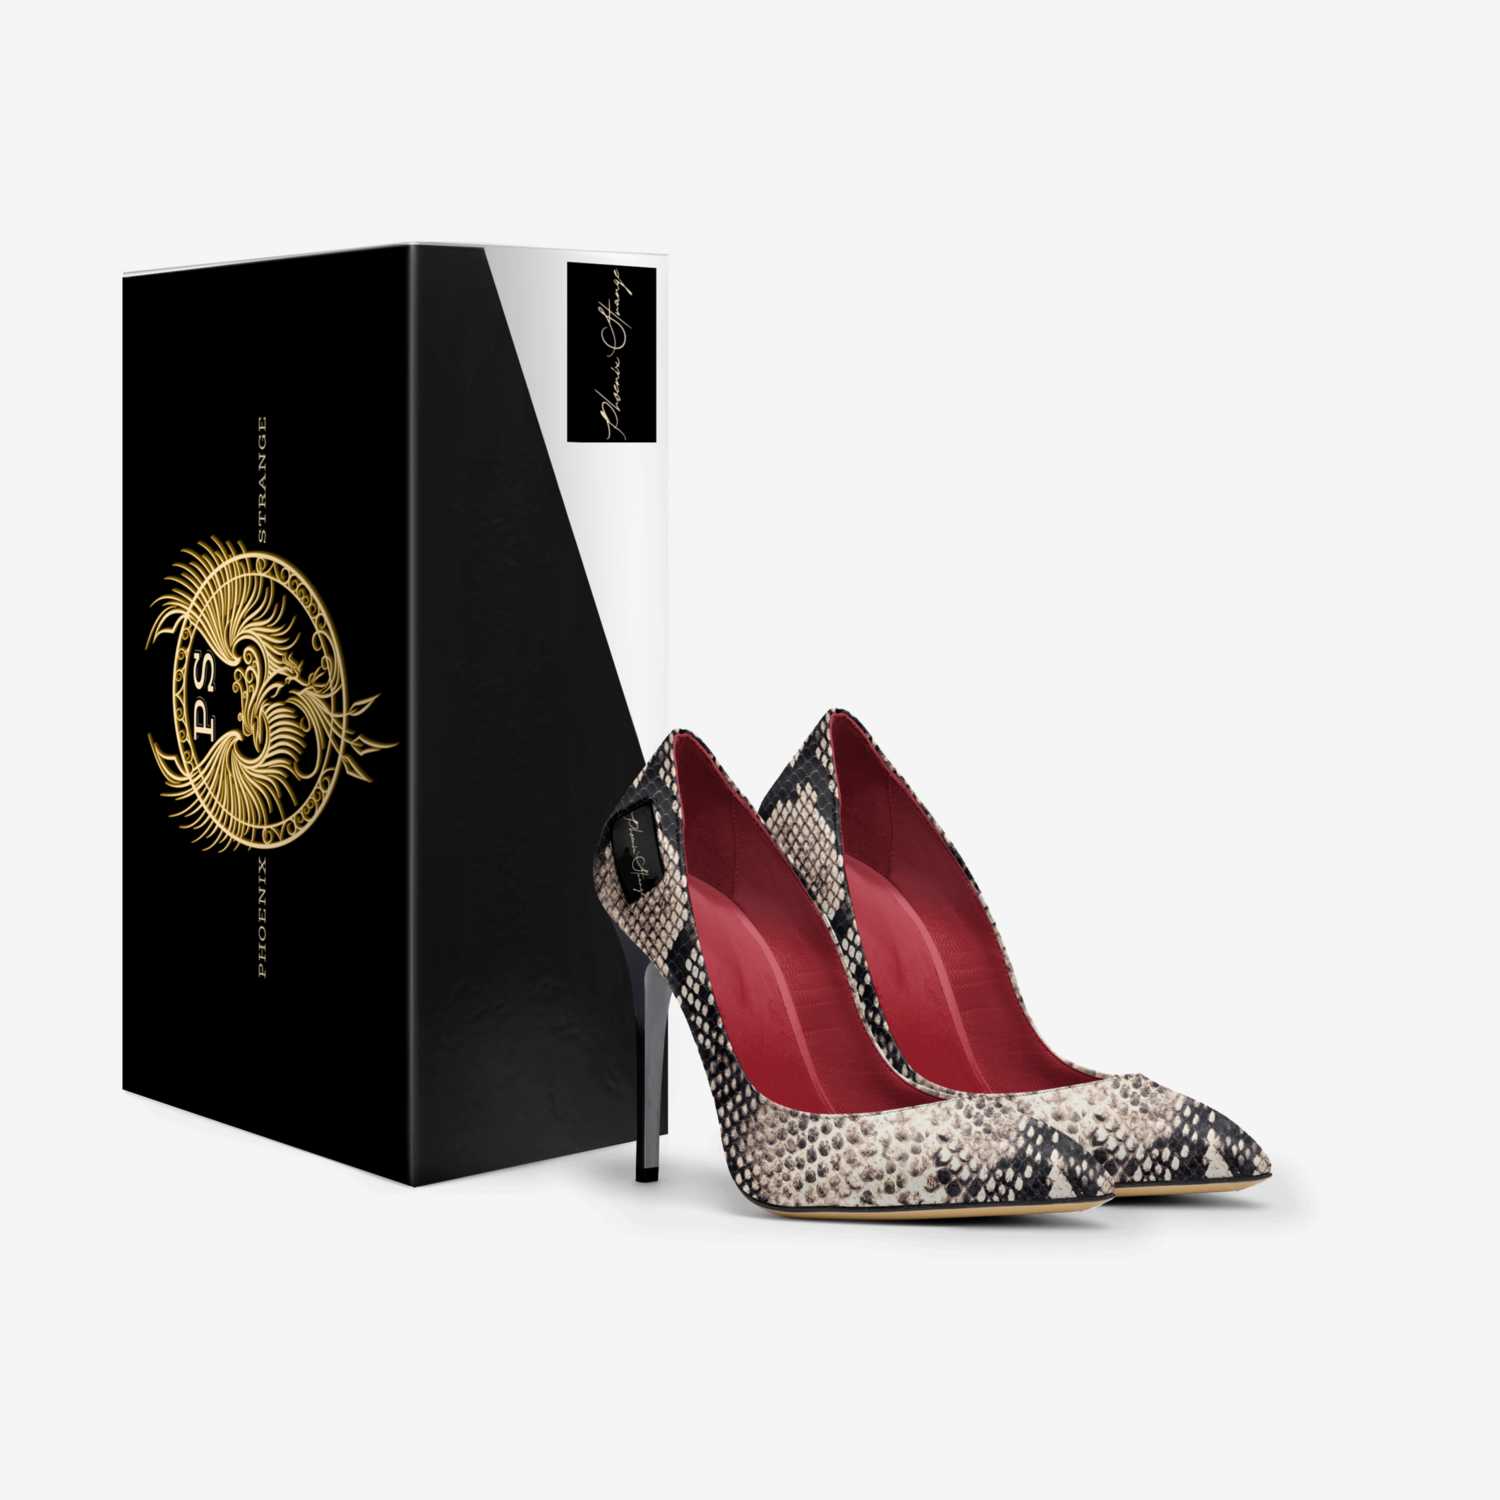 Wynona custom made in Italy shoes by Phoenix Strange | Box view